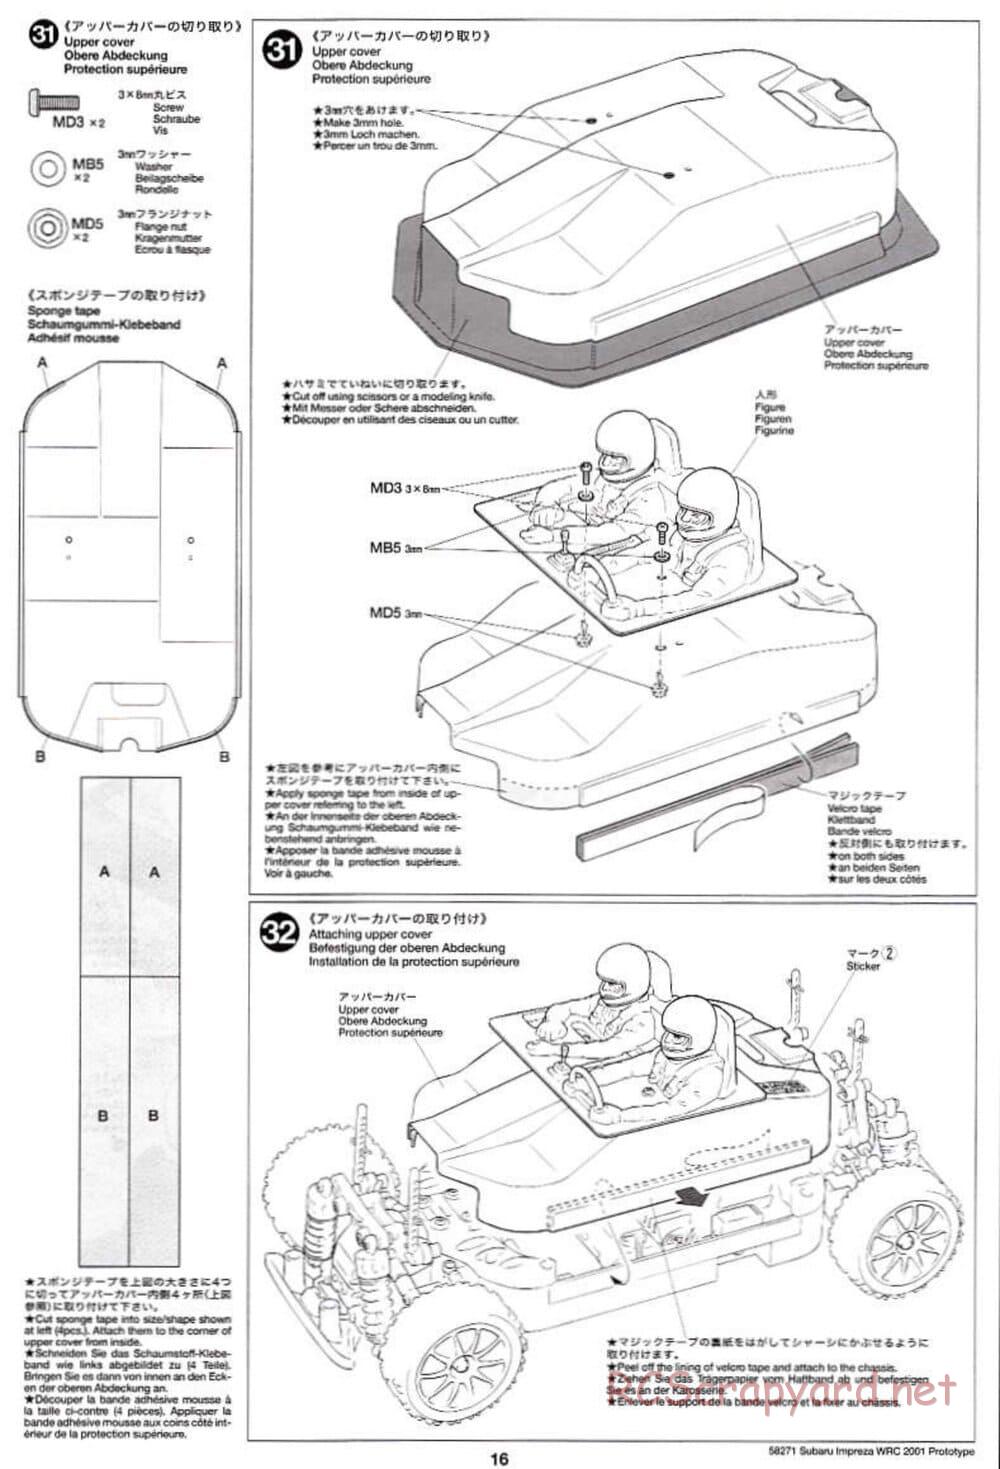 Tamiya - Subaru Impreza WRC 2001 Prototype - TB-01 Chassis - Manual - Page 16